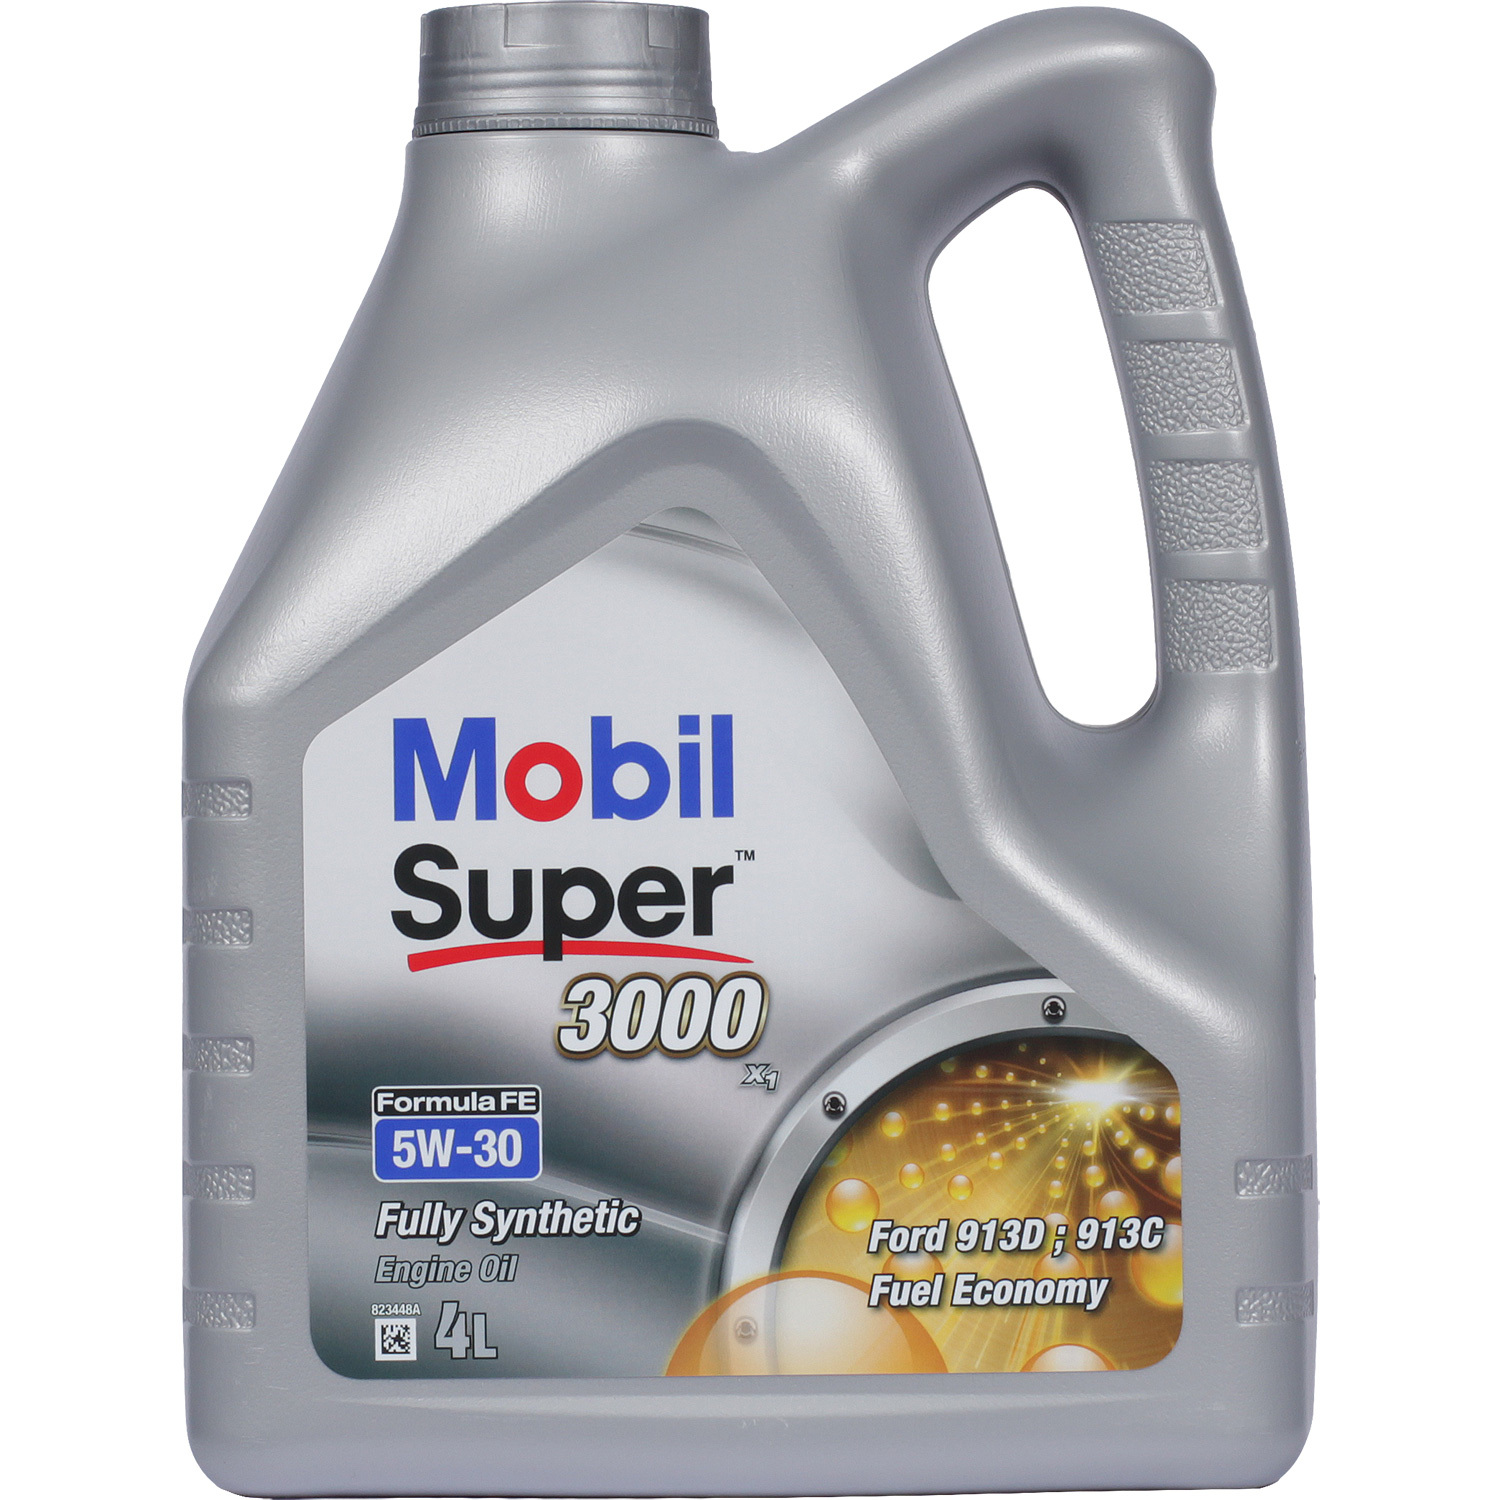 Mobil Моторное масло Mobil Super 3000 X1 Formula FE 5W-30, 4 л масло моторное mobil super 2000 x1 10w 40 1 л